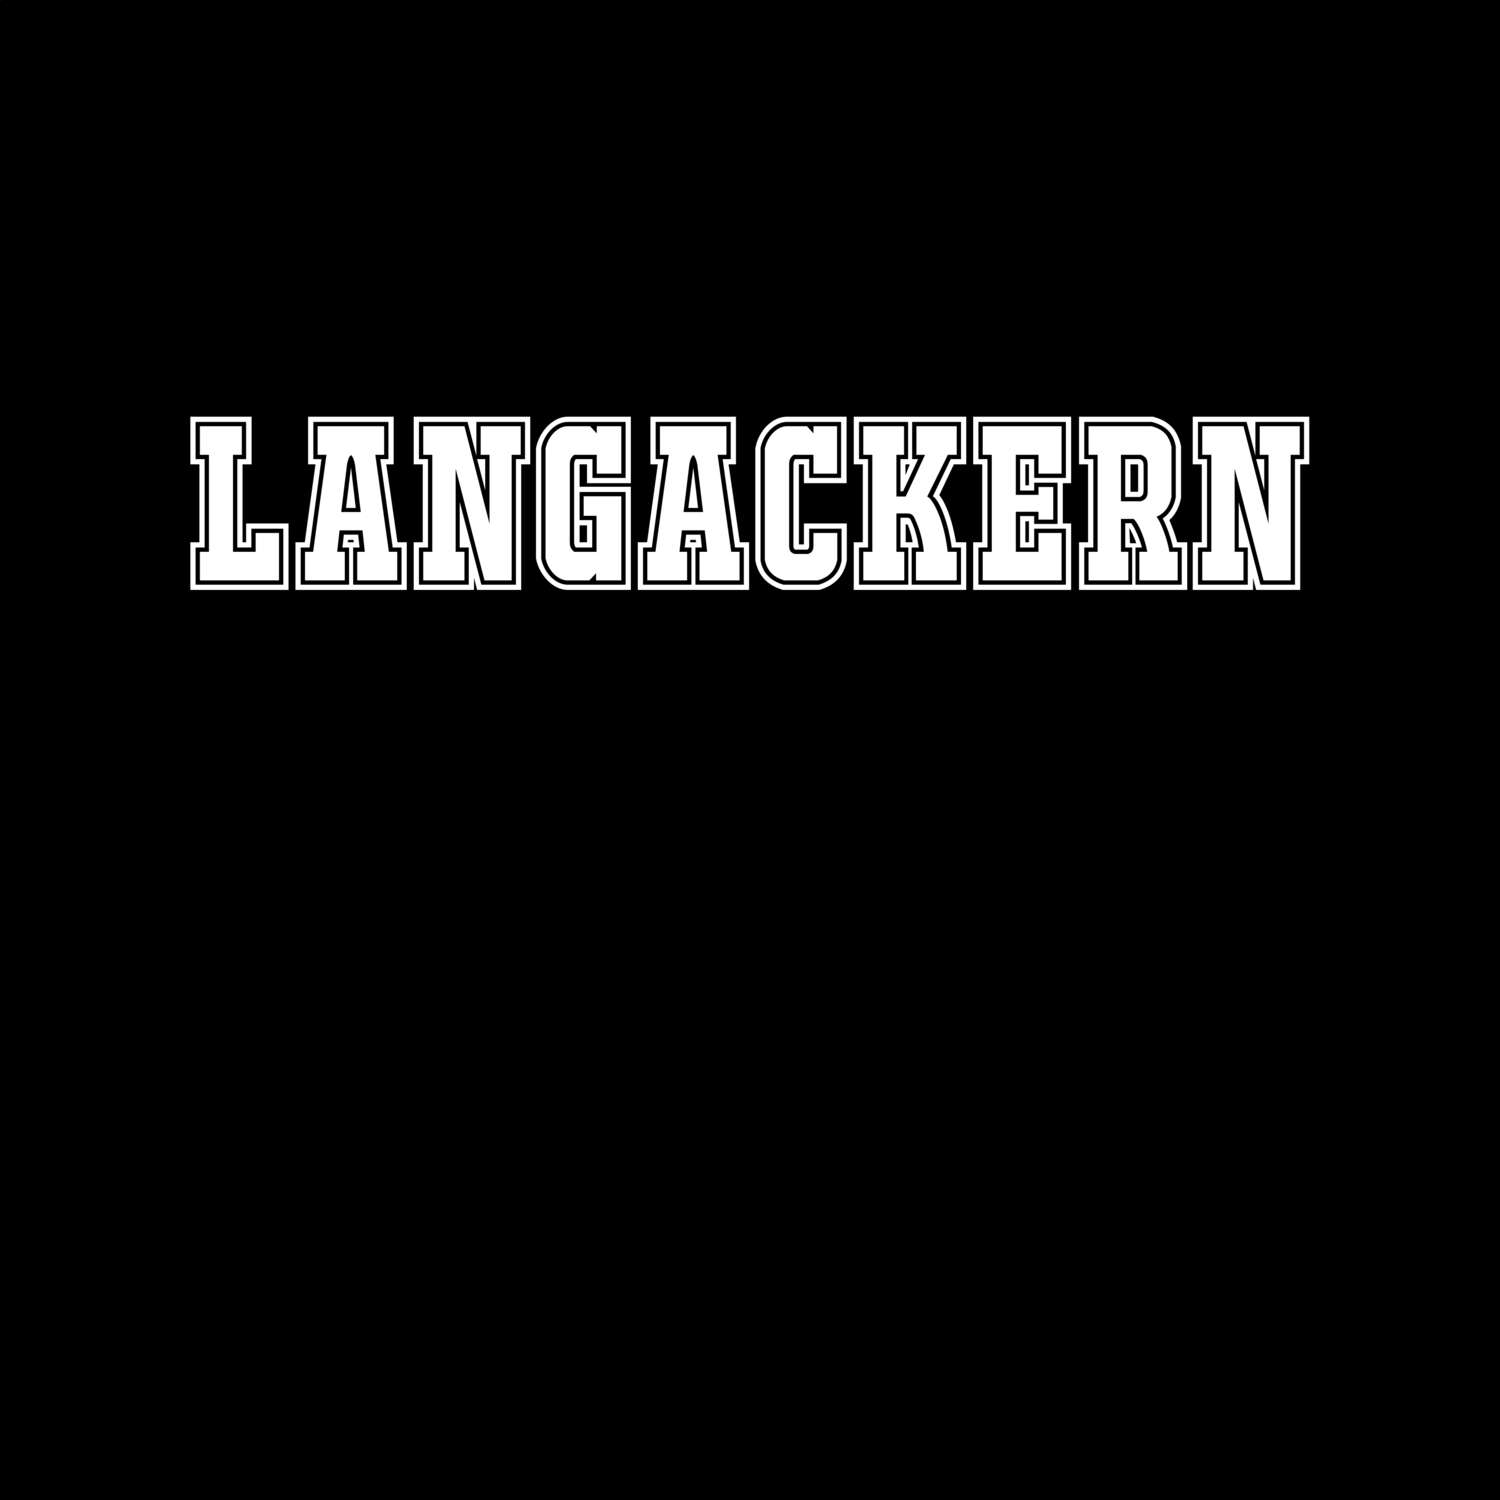 Langackern T-Shirt »Classic«